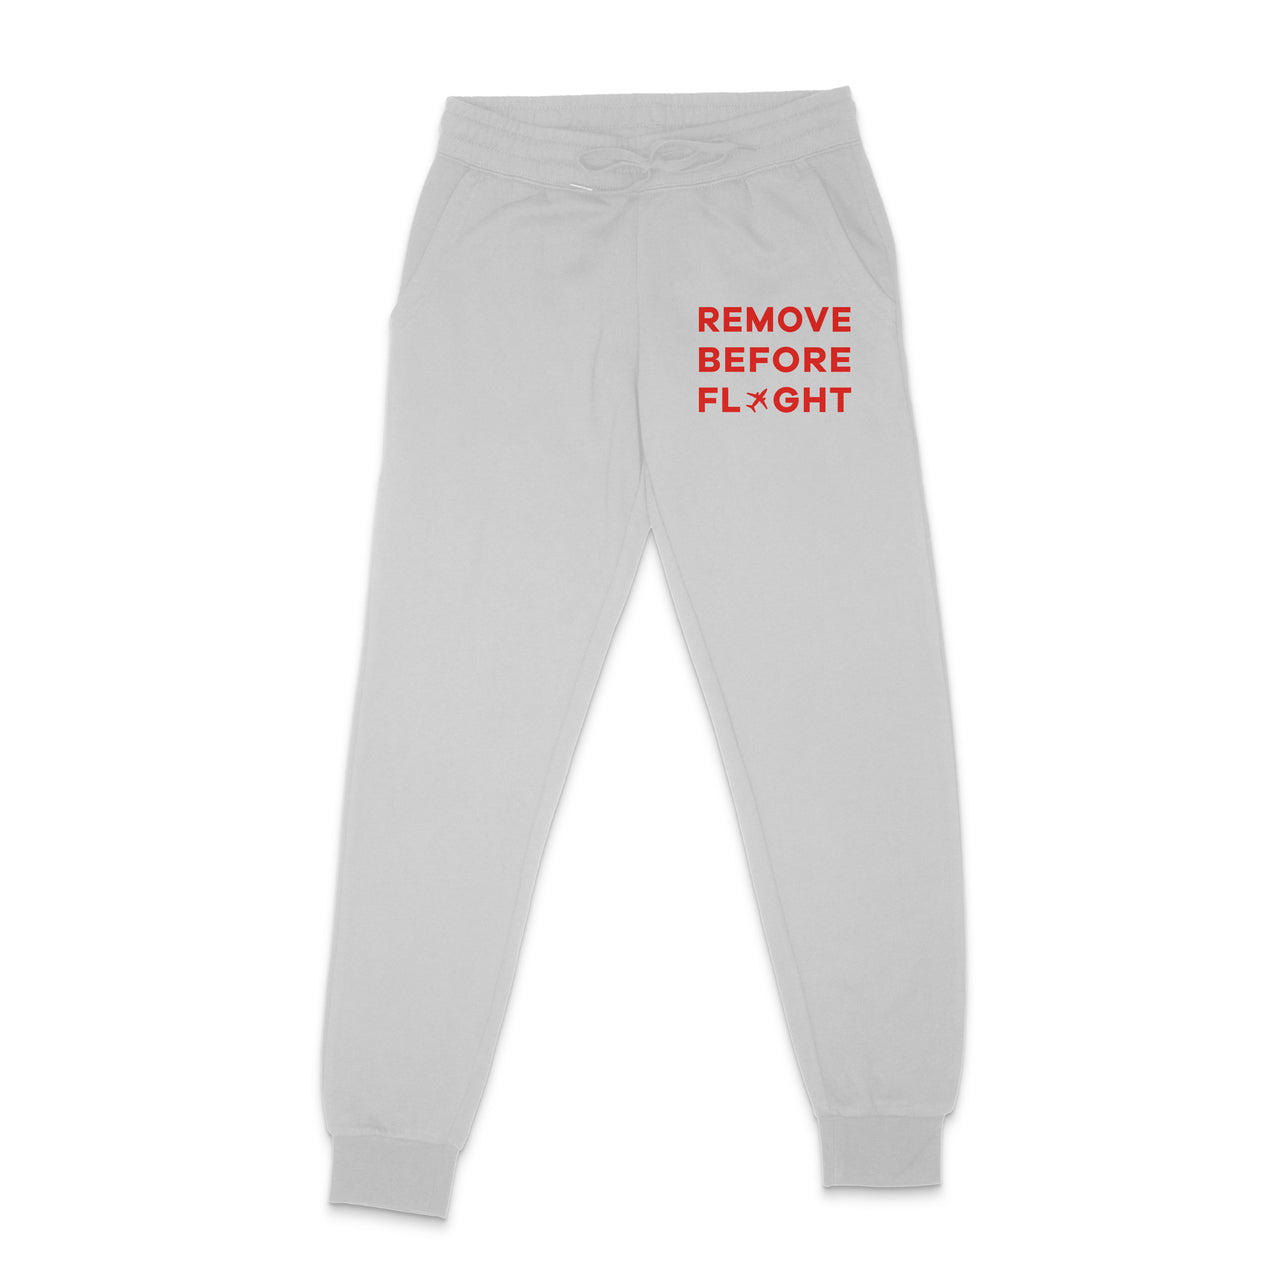 Remove Before Flight Designed Sweatpants